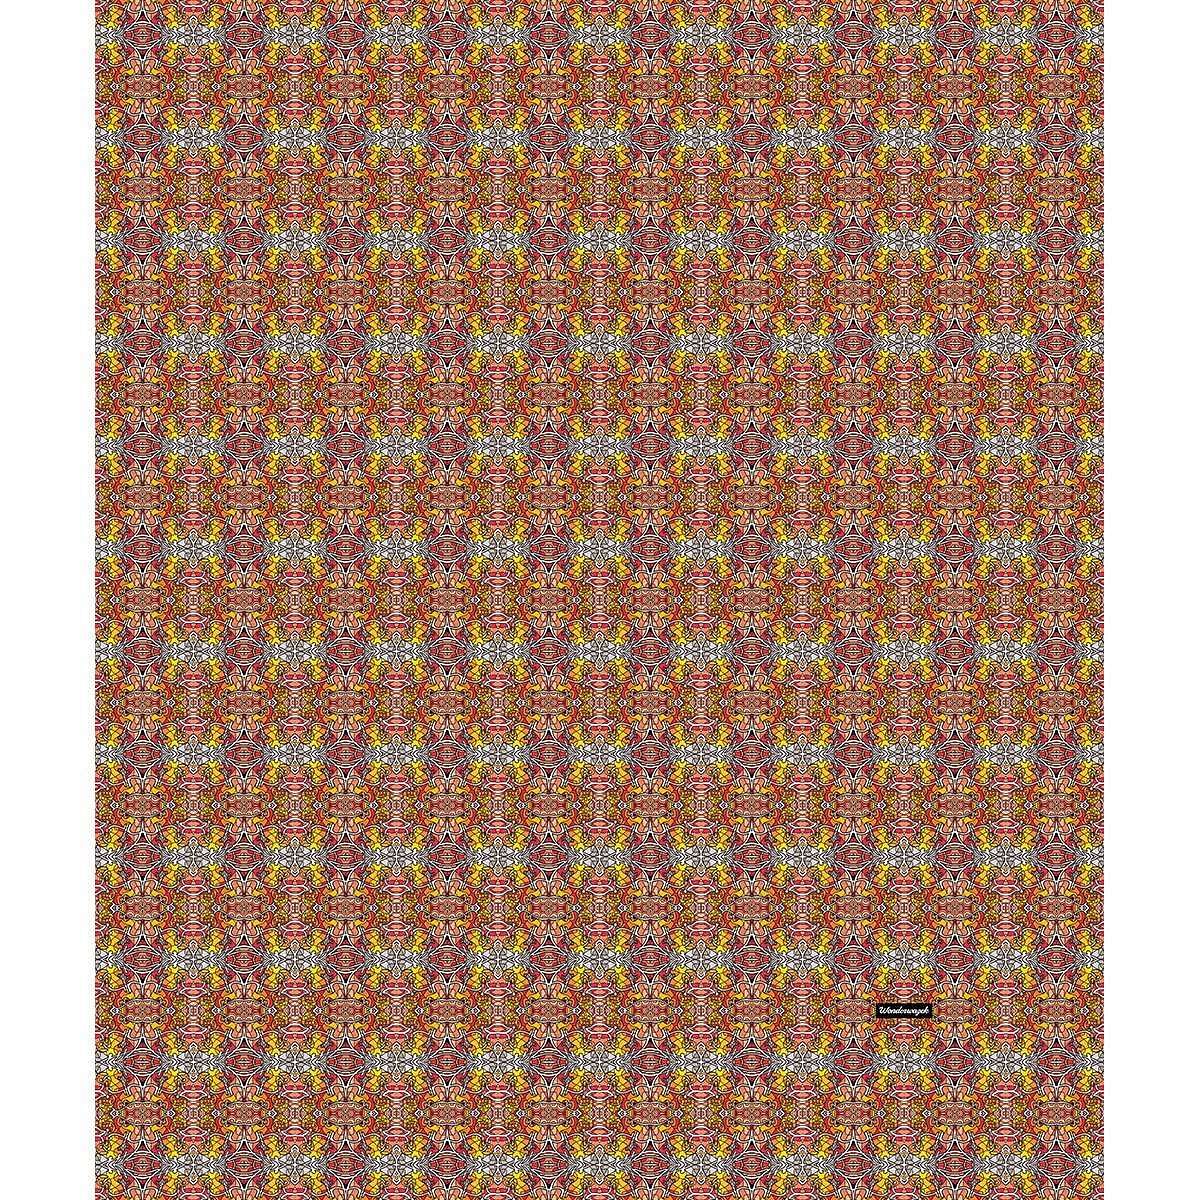 Decke • Vincent – Variation 1, gelb, grau, orange, rot - Wonderwazek